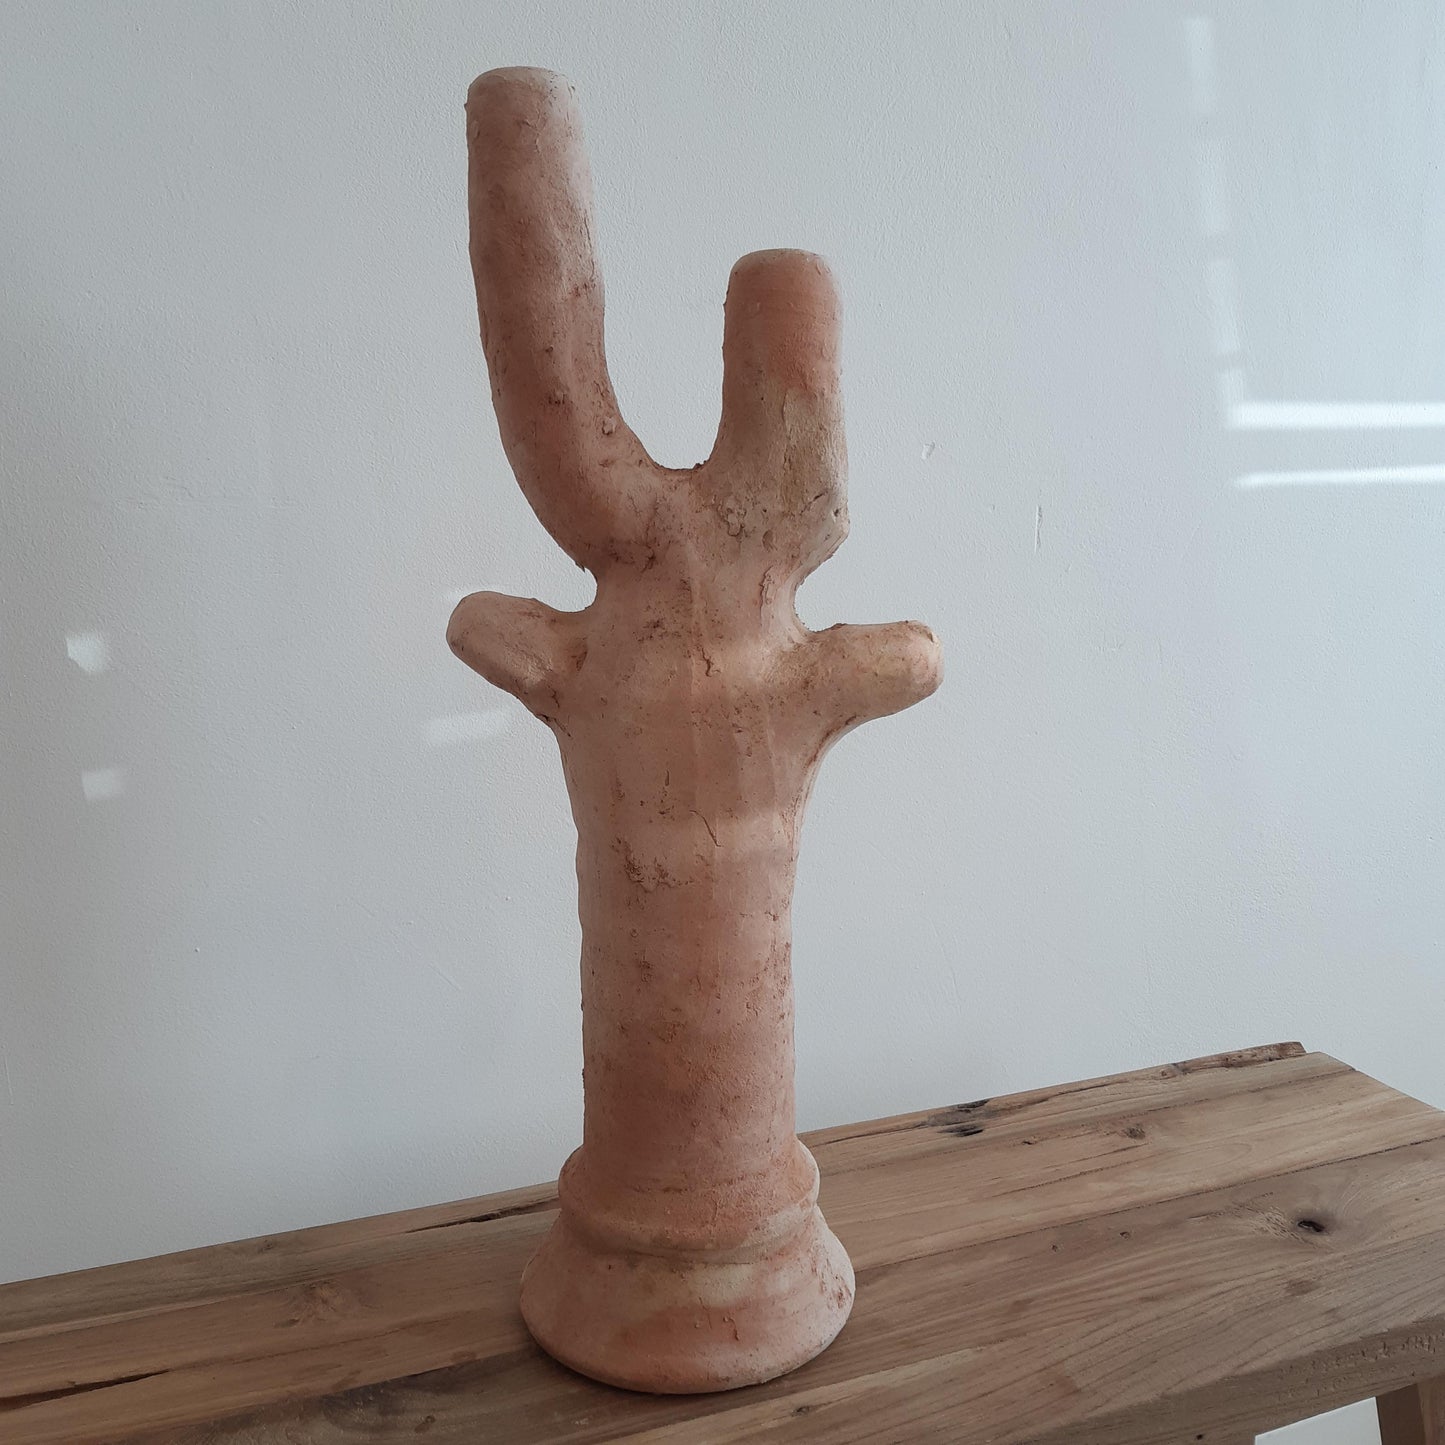 Terracotta vaas/beeld